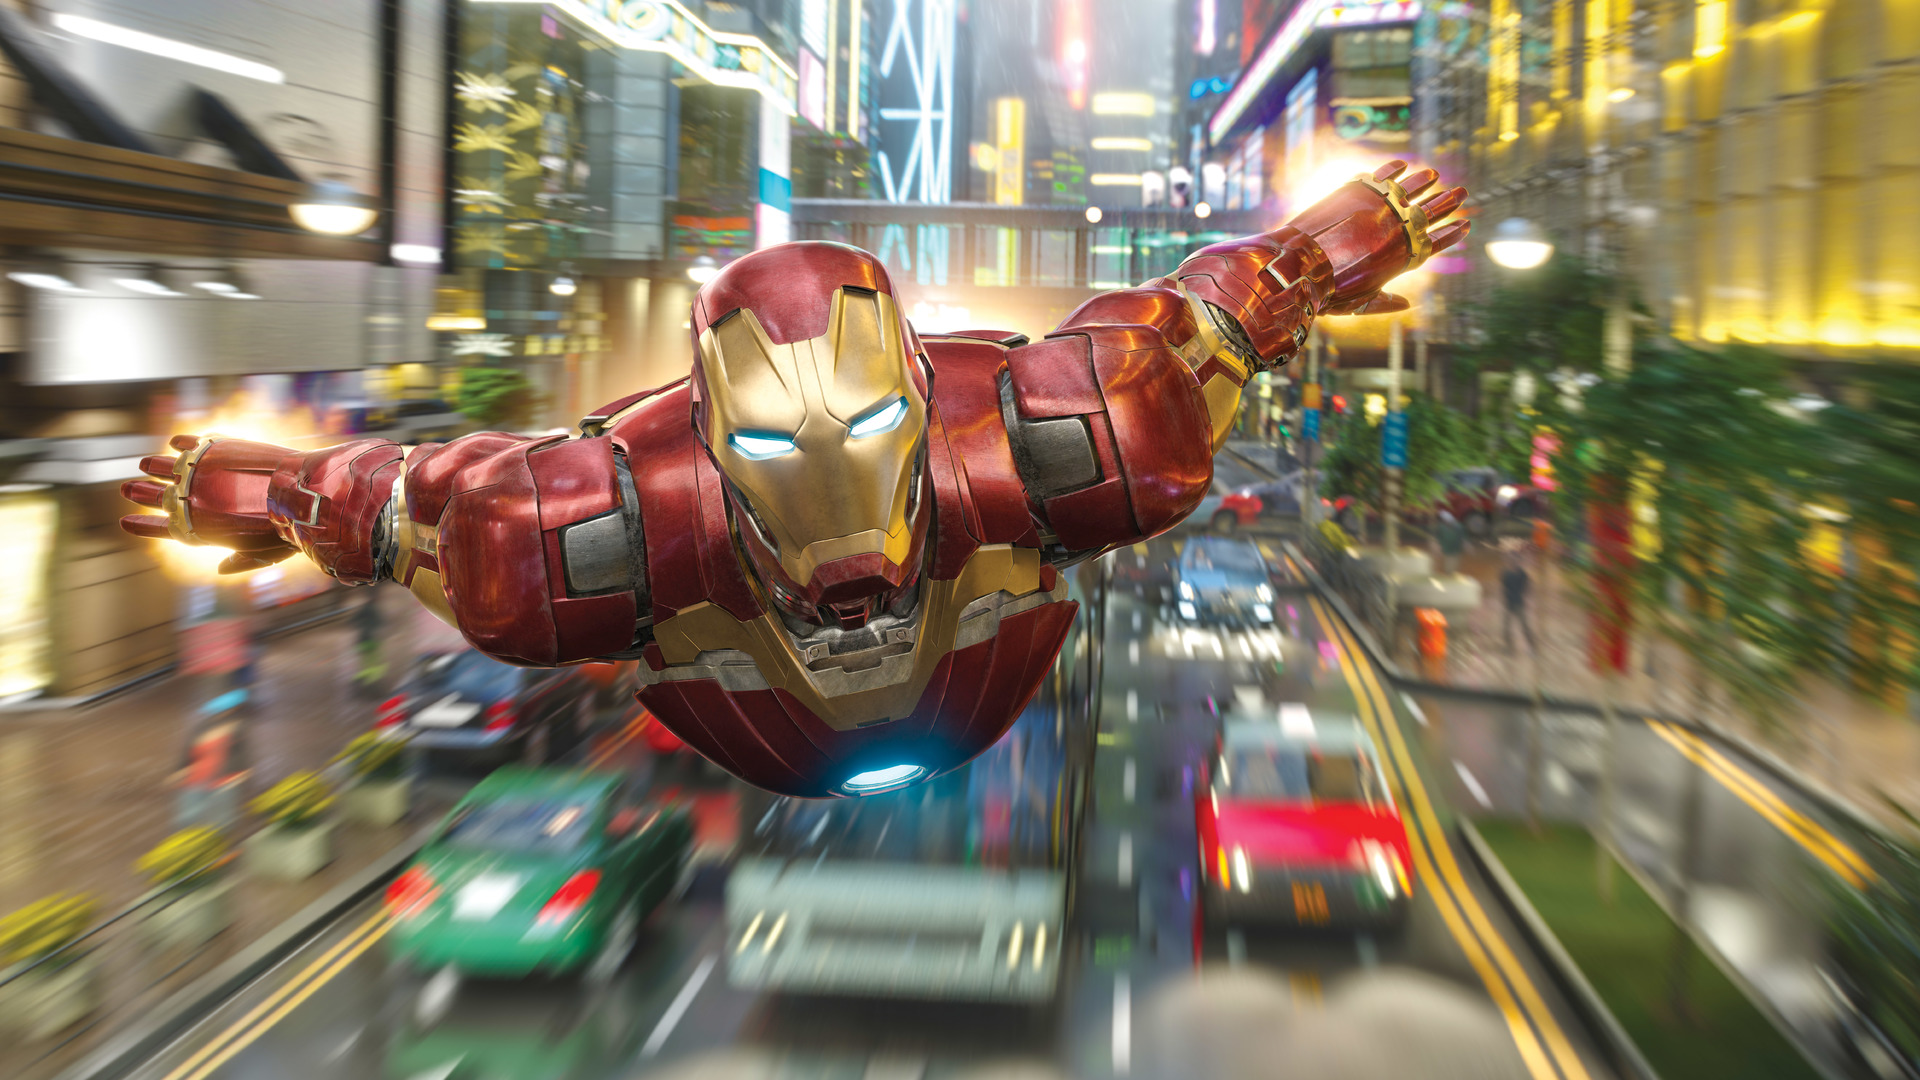 General 1920x1080 Iron Man superhero Marvel Comics Marvel Cinematic Universe motion blur